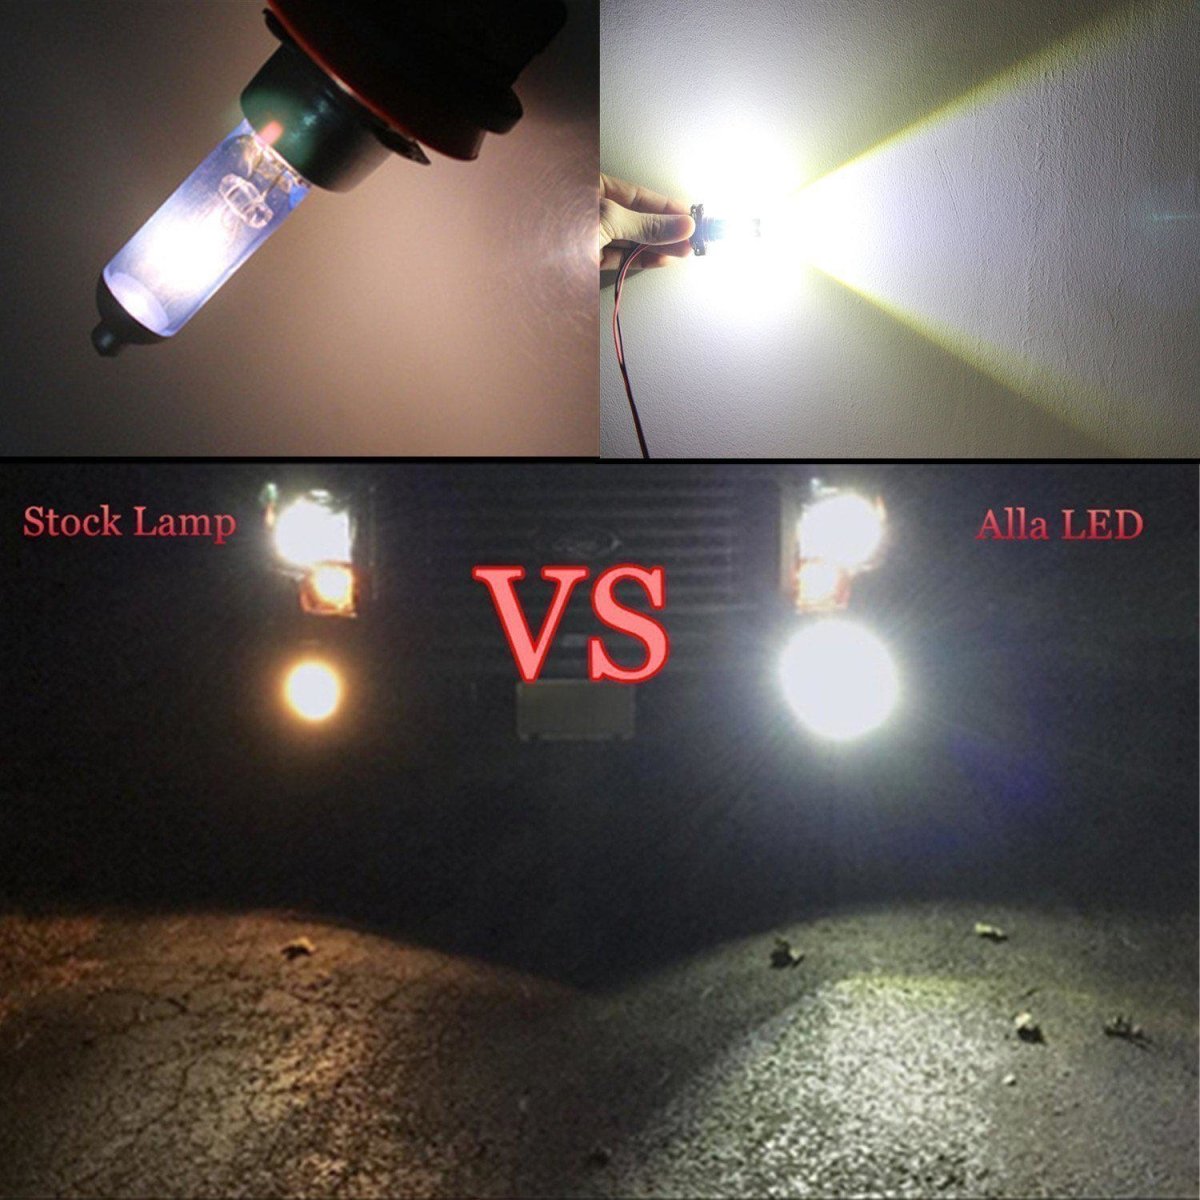 921 Super bright T15 w16w 4000LM Backup reverse light Bulb white LED  Projector F